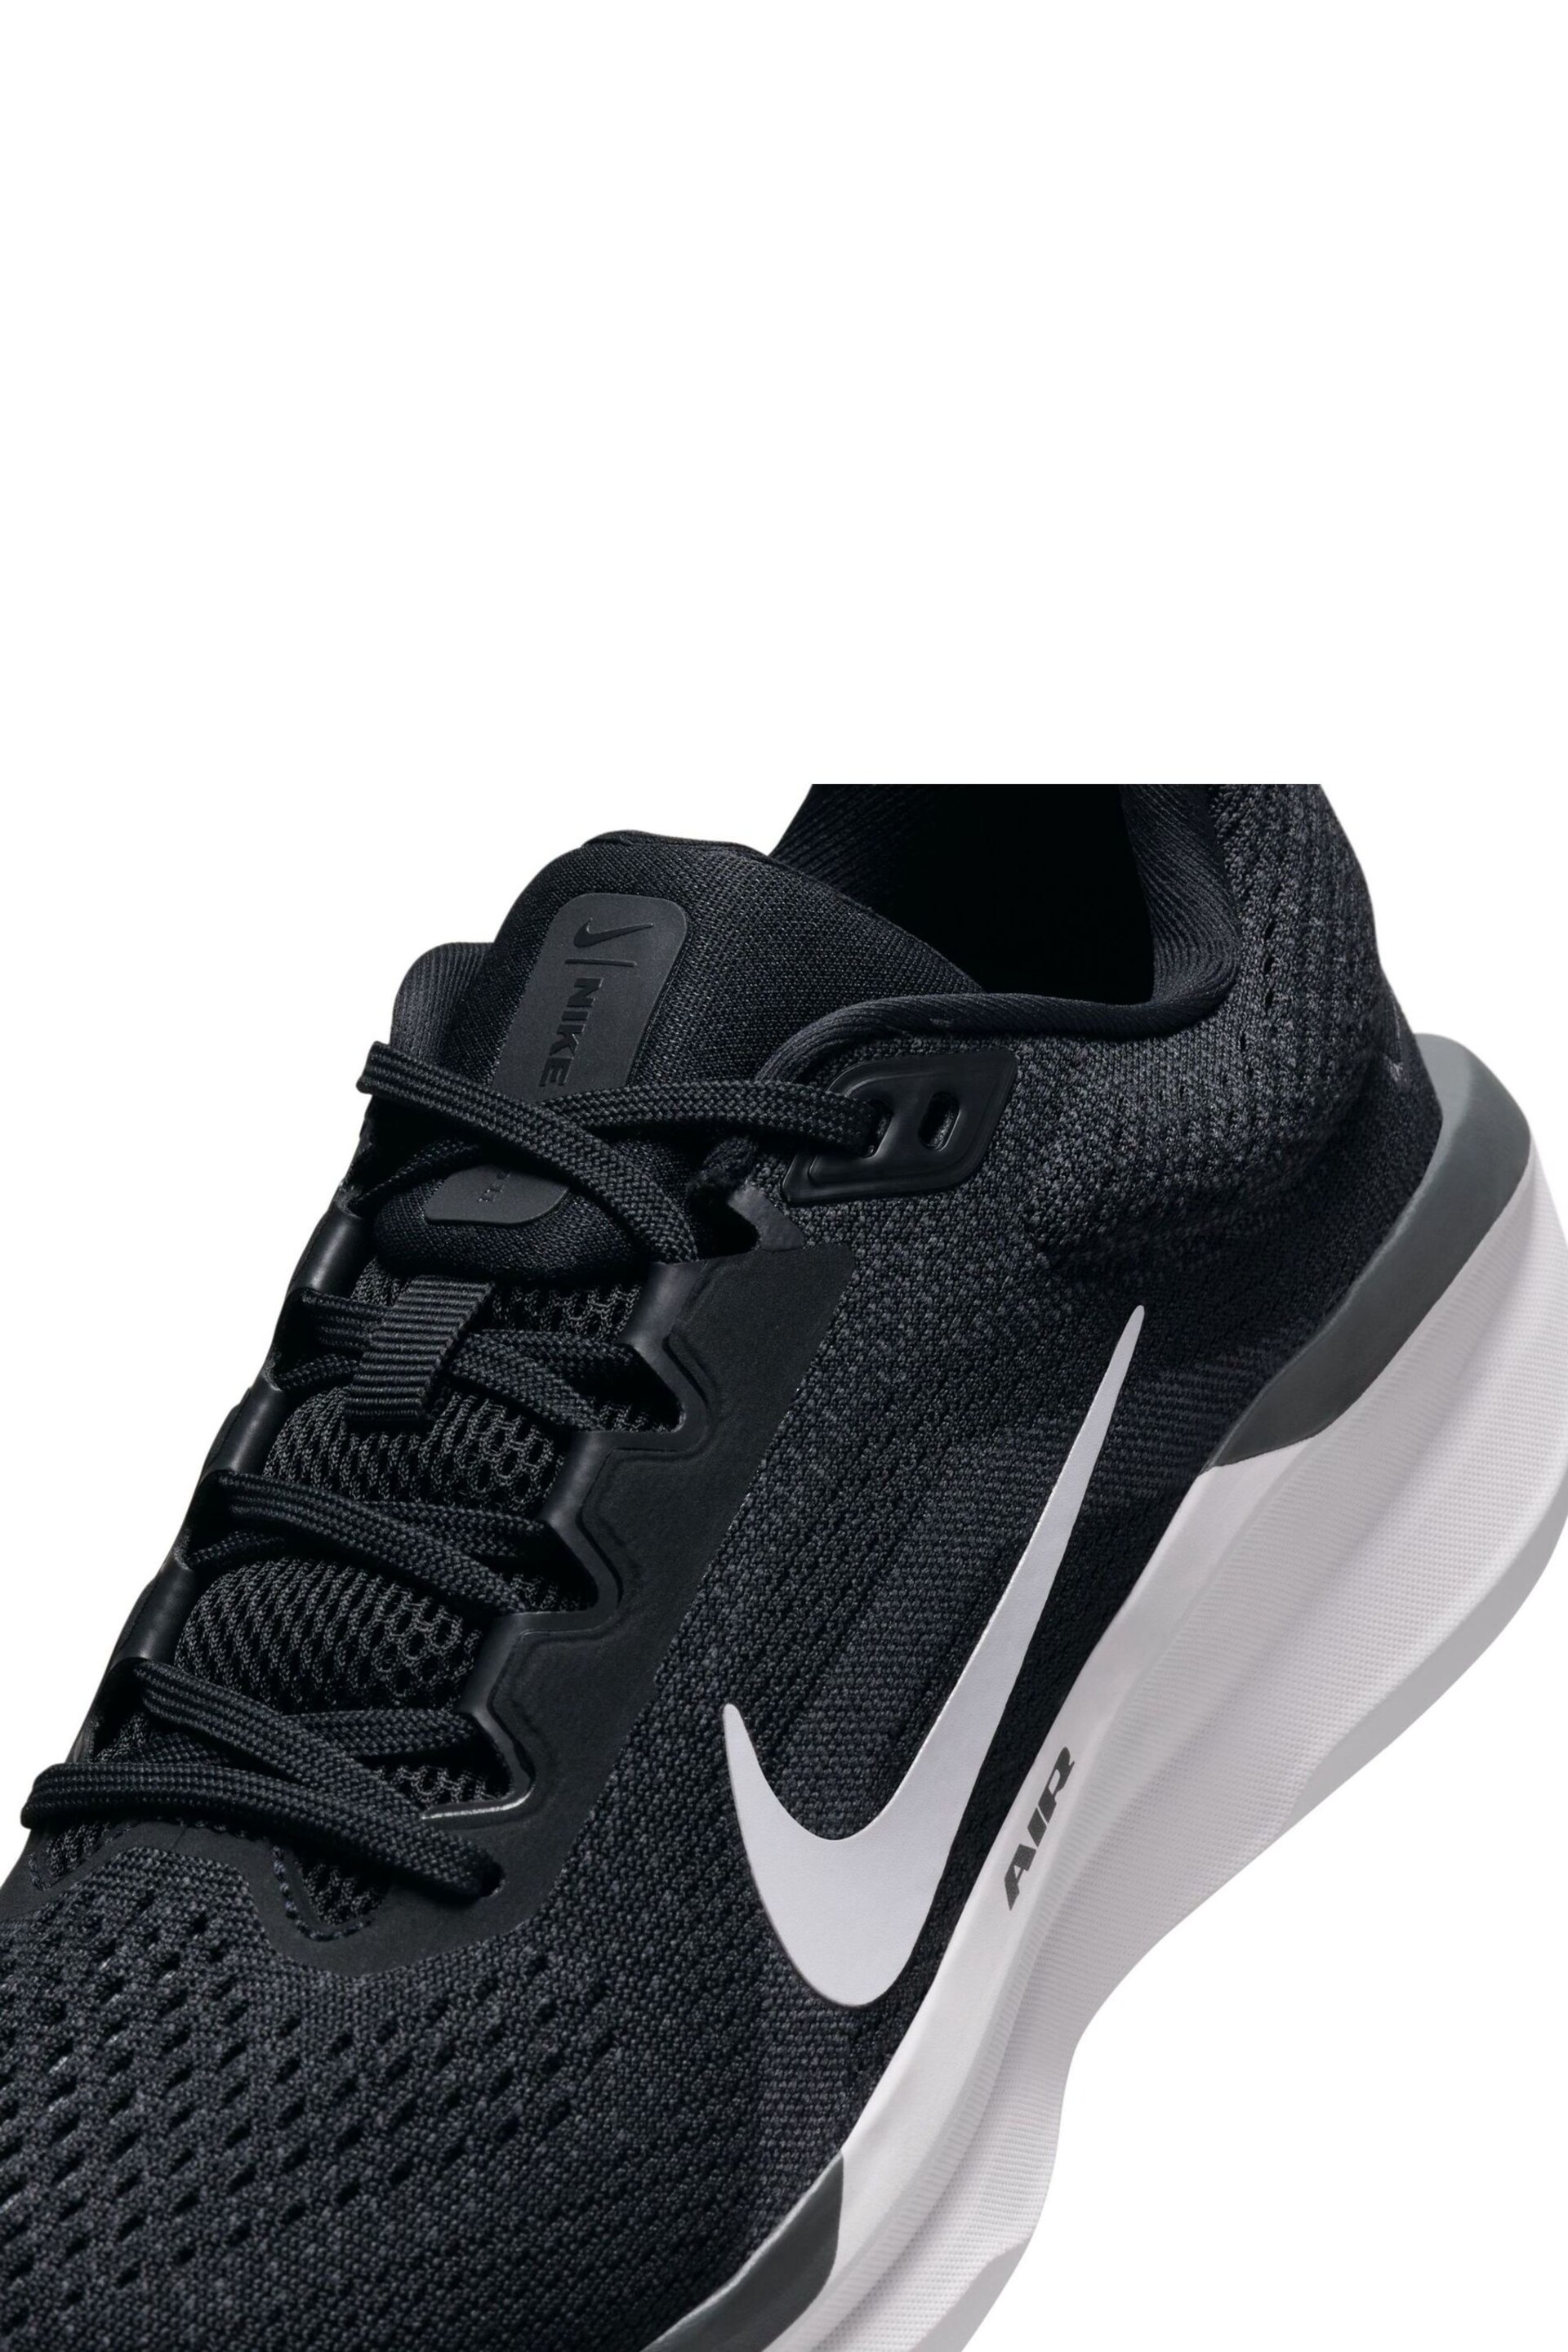 Nike Black/White Winflo 11 Road Running Trainers - Image 10 of 11